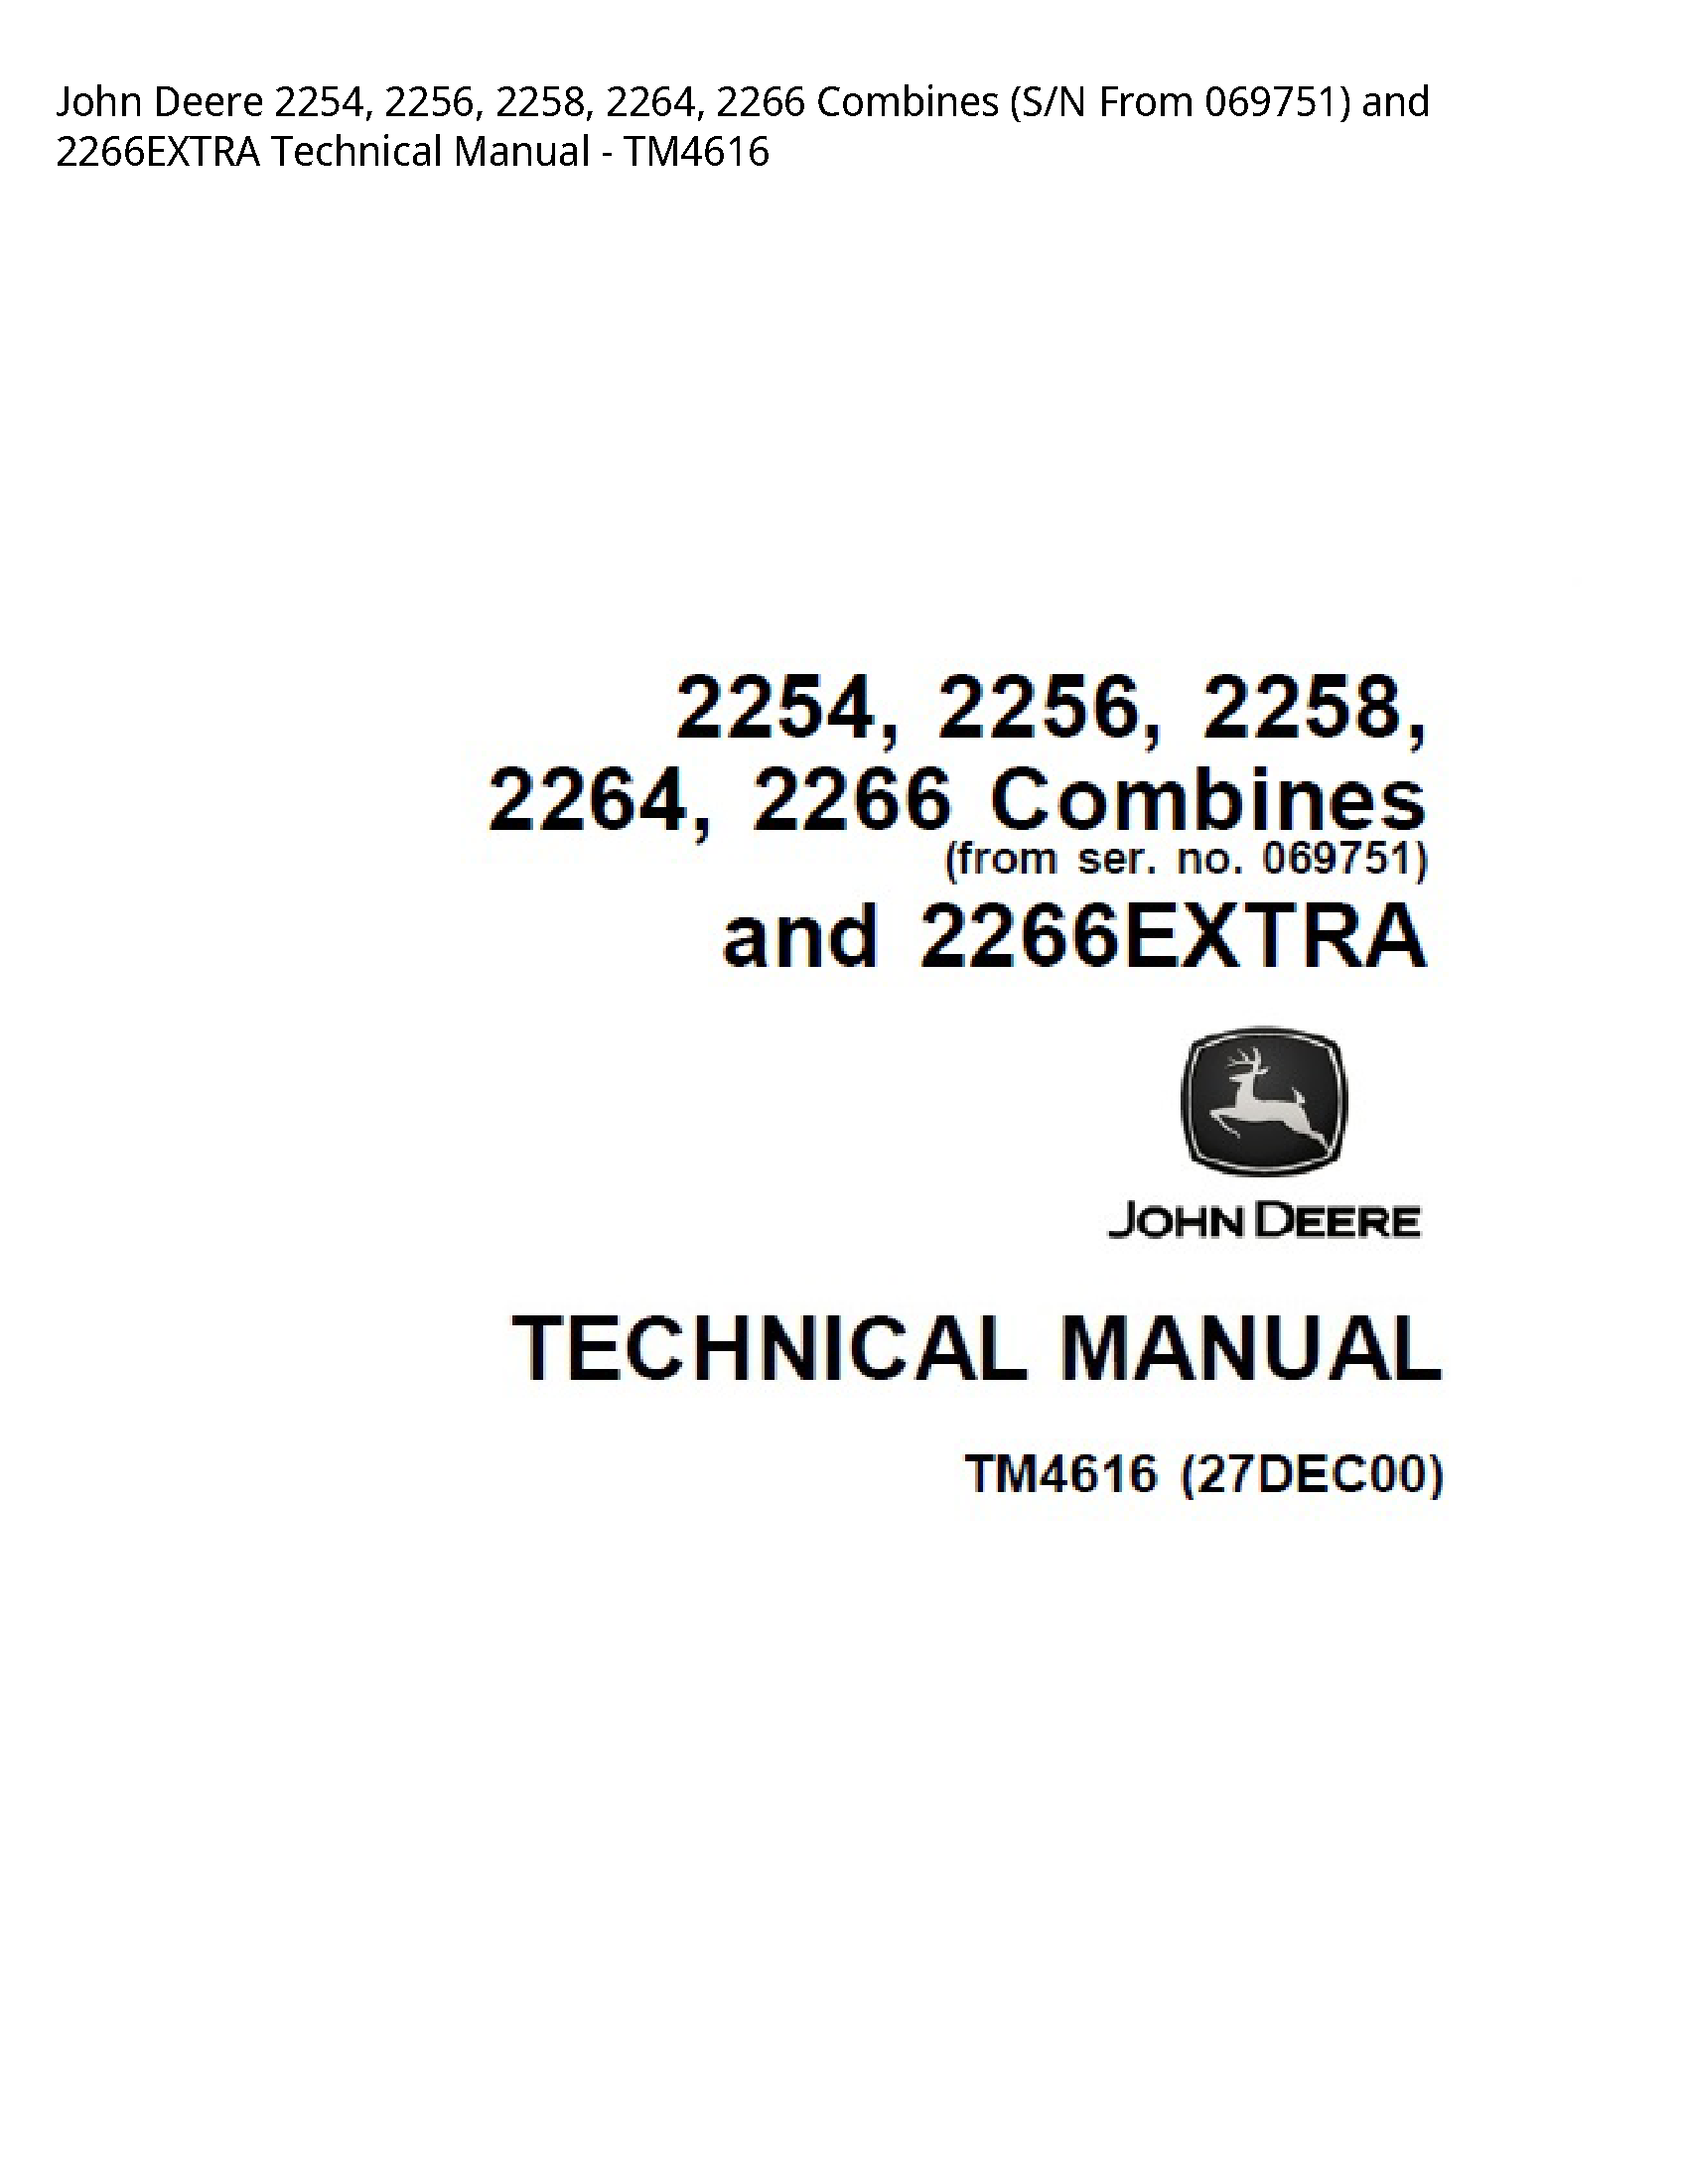 John Deere 2254 Combines S/N From  Technical manual